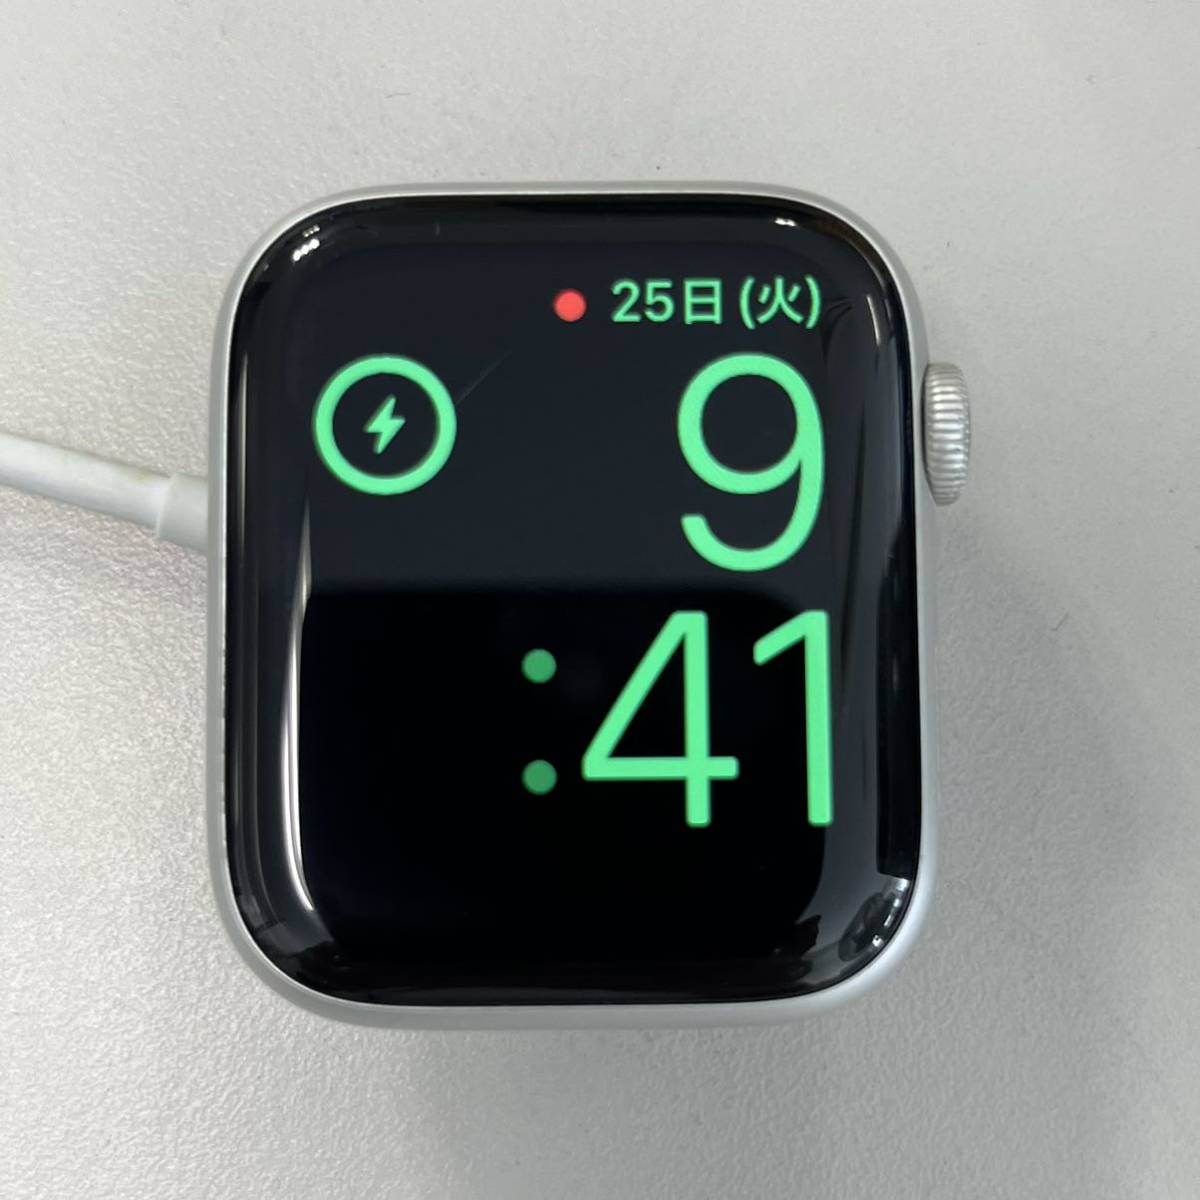 Apple Watch Series 4 シルバーアルミニウムケース GPS + Cellular